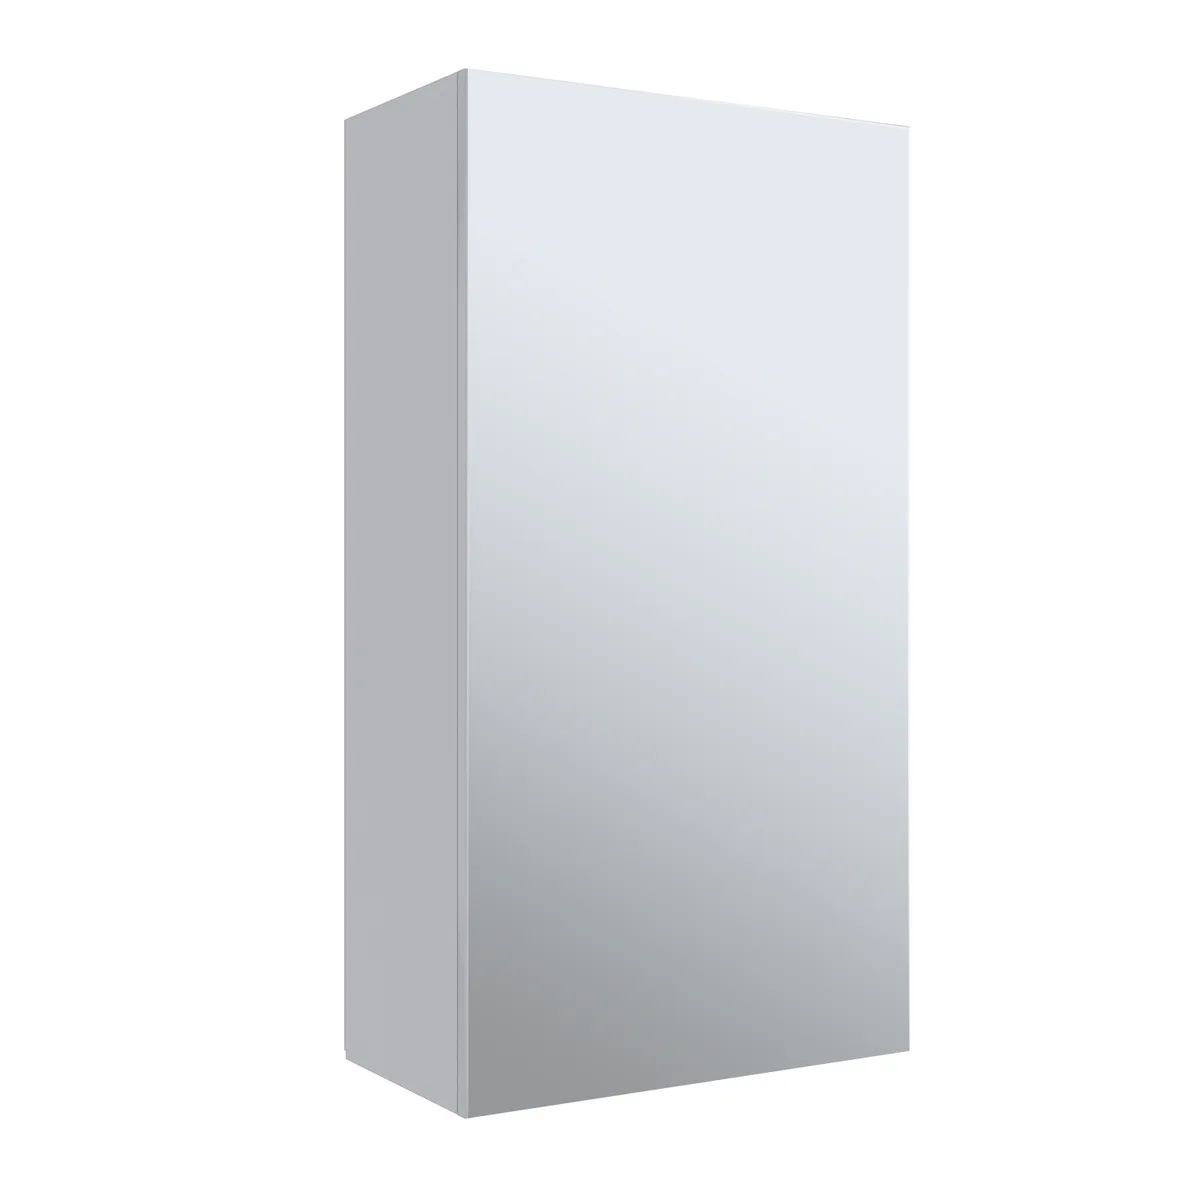 Зеркало шкаф для ванной Runo Кредо 40 белый, универсальный зеркальный шкаф onika кредо 35 угловой универсальный